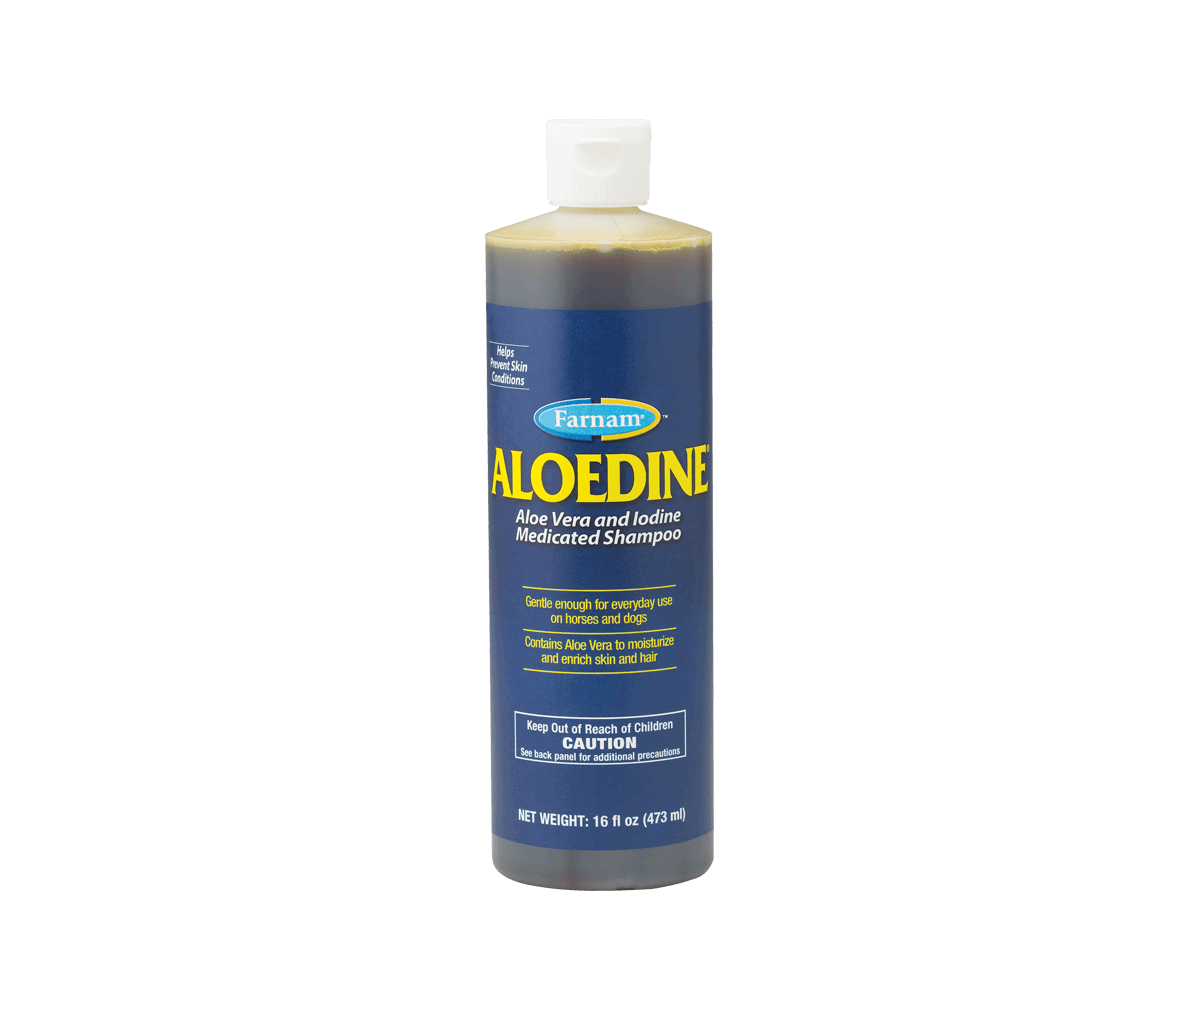 Aloedine-Aloe-Vera-and-Iodine-Medicated-Shampoo_16-fl-oz_21112_Product-Image-png